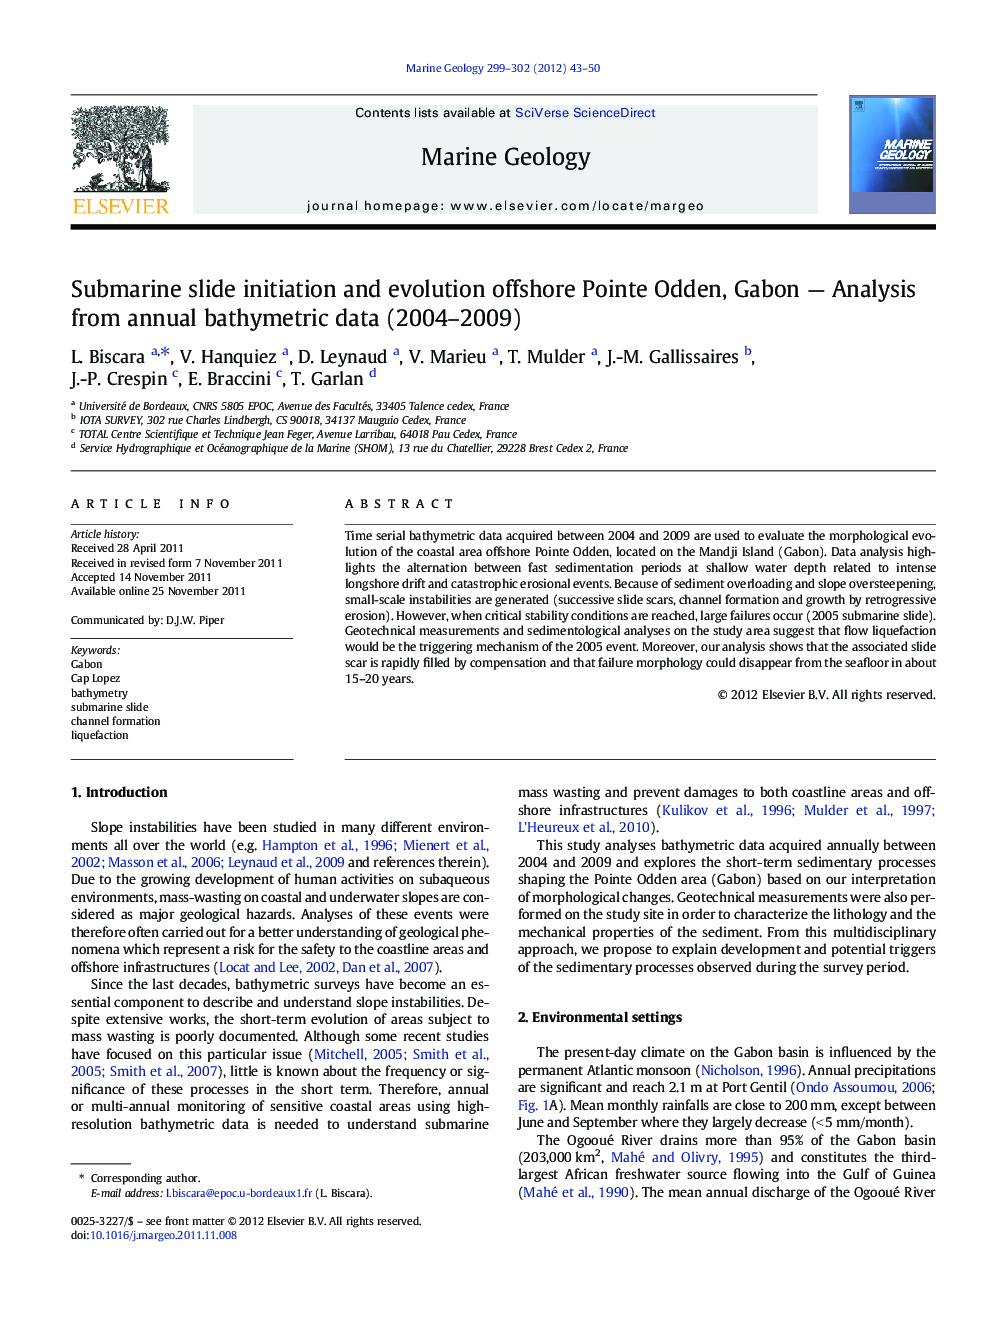 Submarine slide initiation and evolution offshore Pointe Odden, Gabon — Analysis from annual bathymetric data (2004–2009)